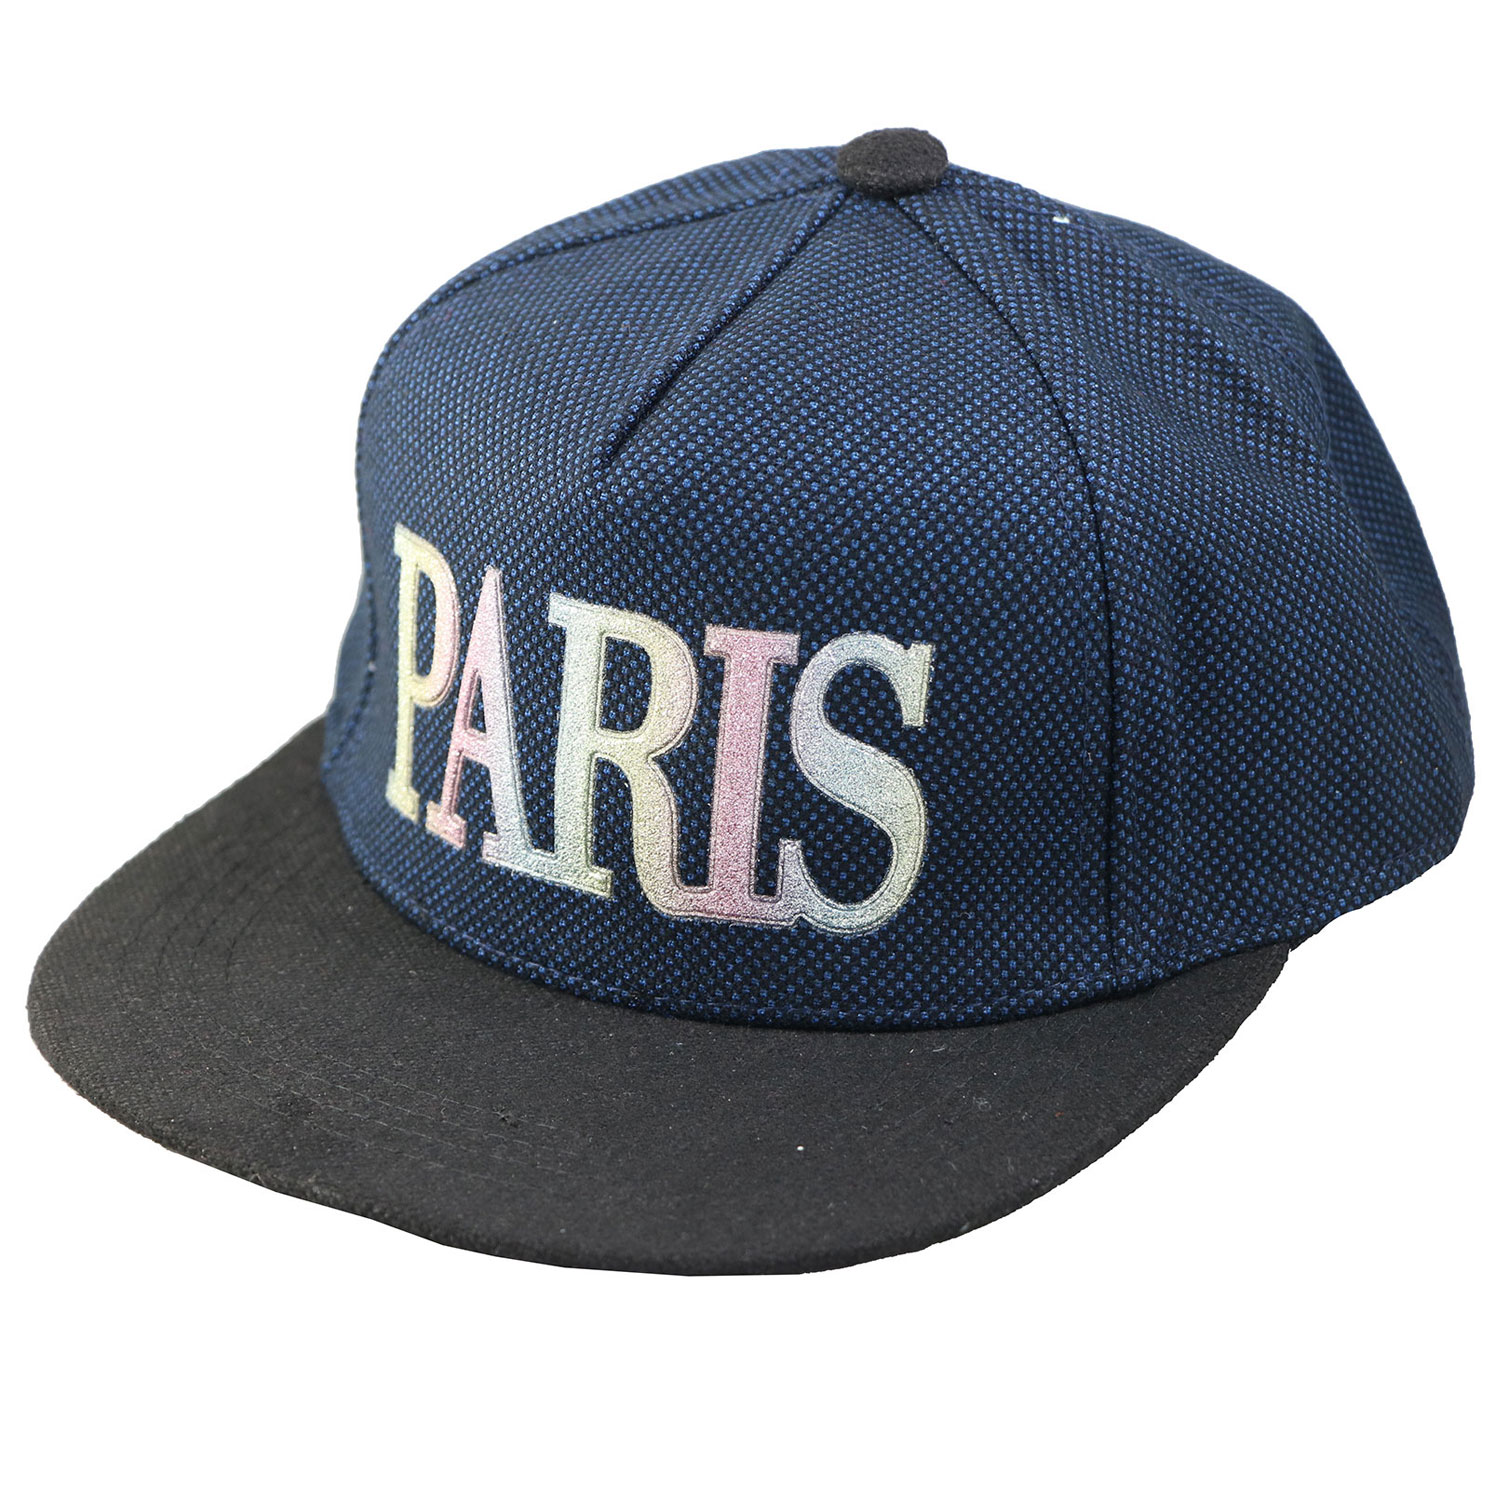 کلاه کپ پاریس کد 118